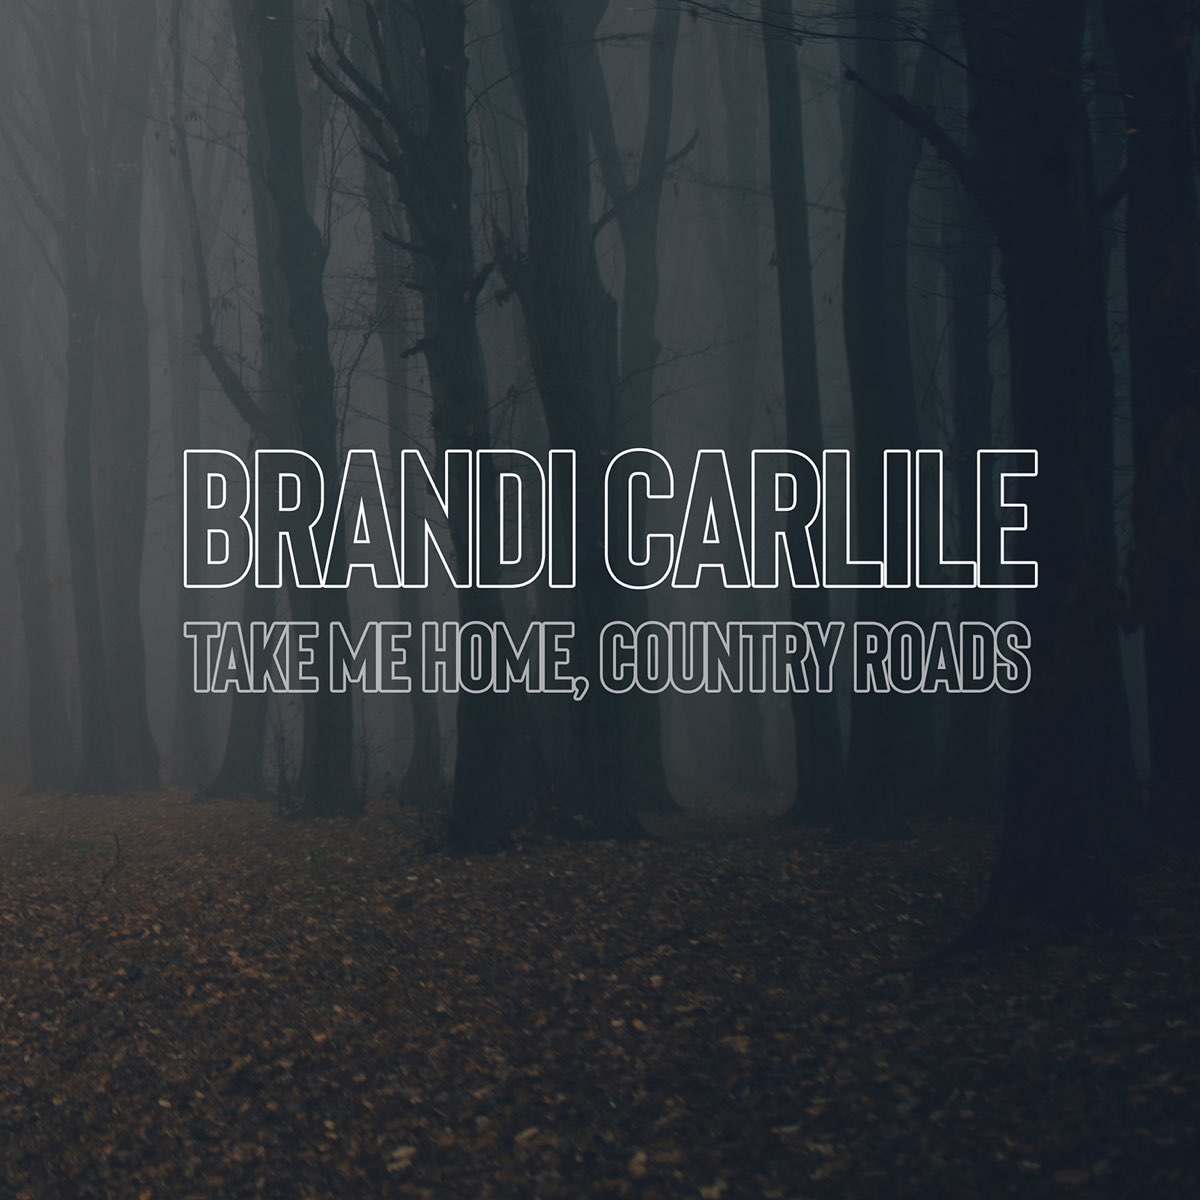 Take Me Home, Country Roads - Single by Brandi Carlile on Apple Music